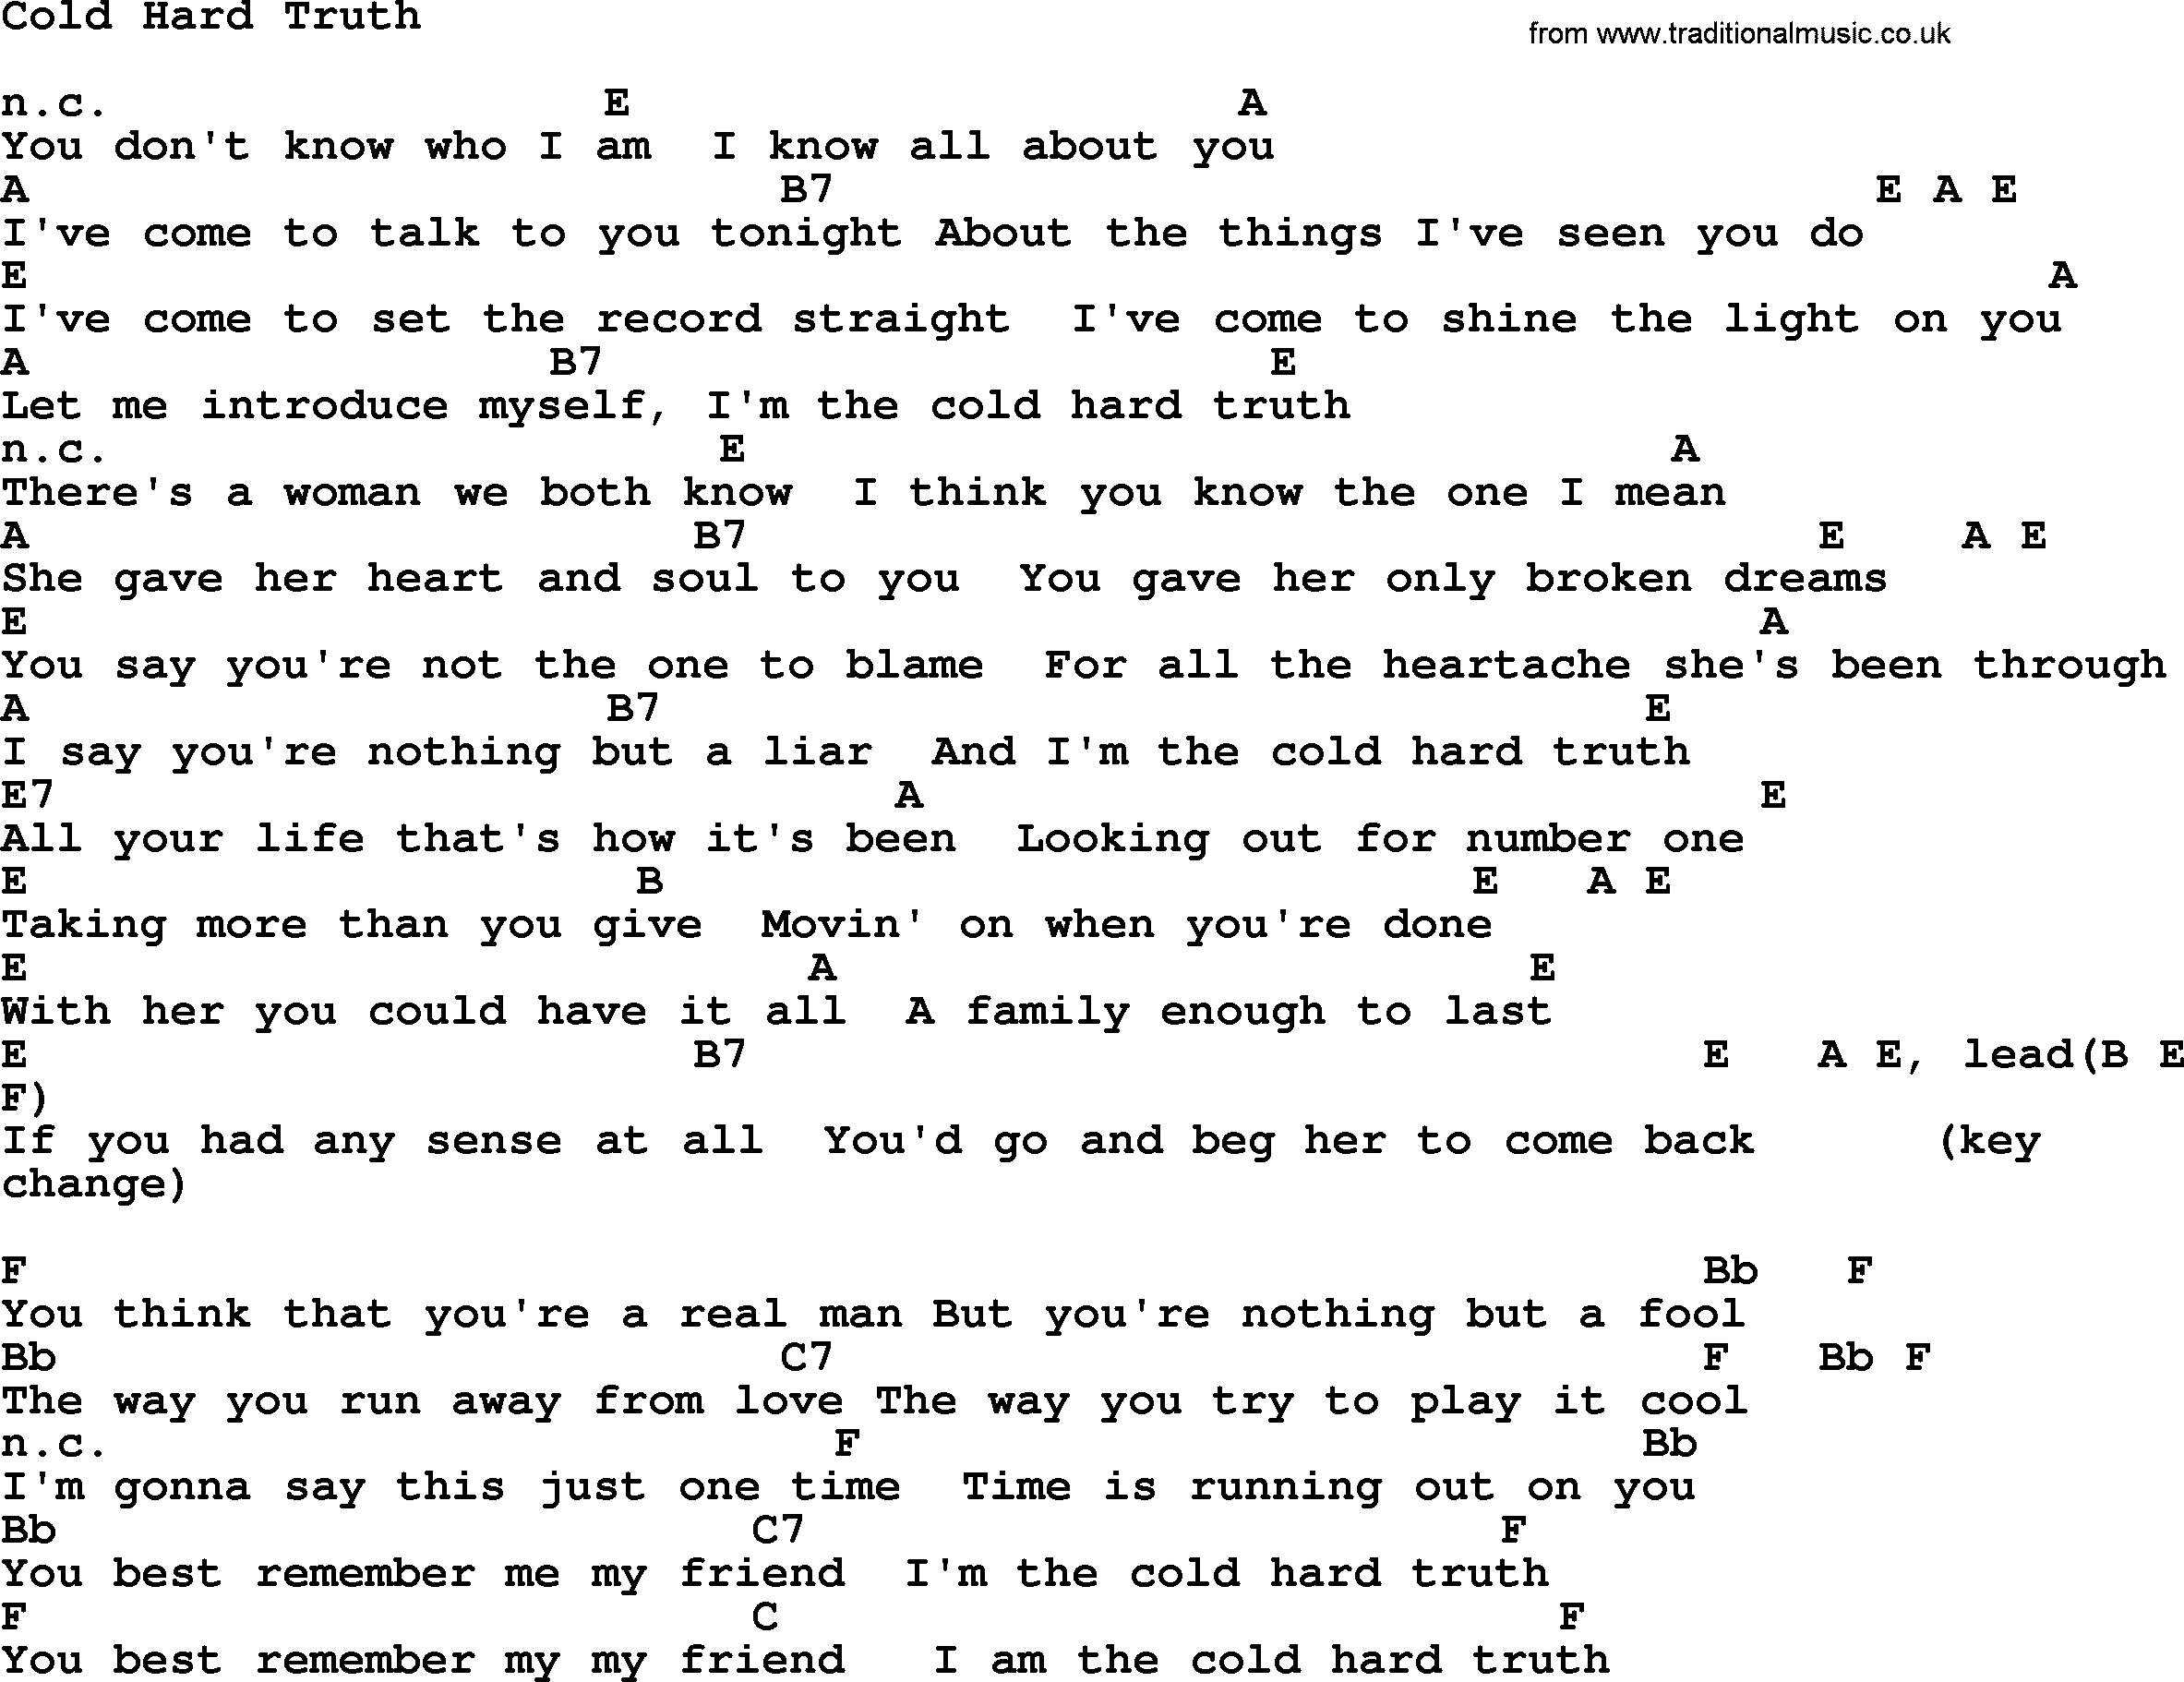 George Jones song: Cold Hard Truth, lyrics and chords